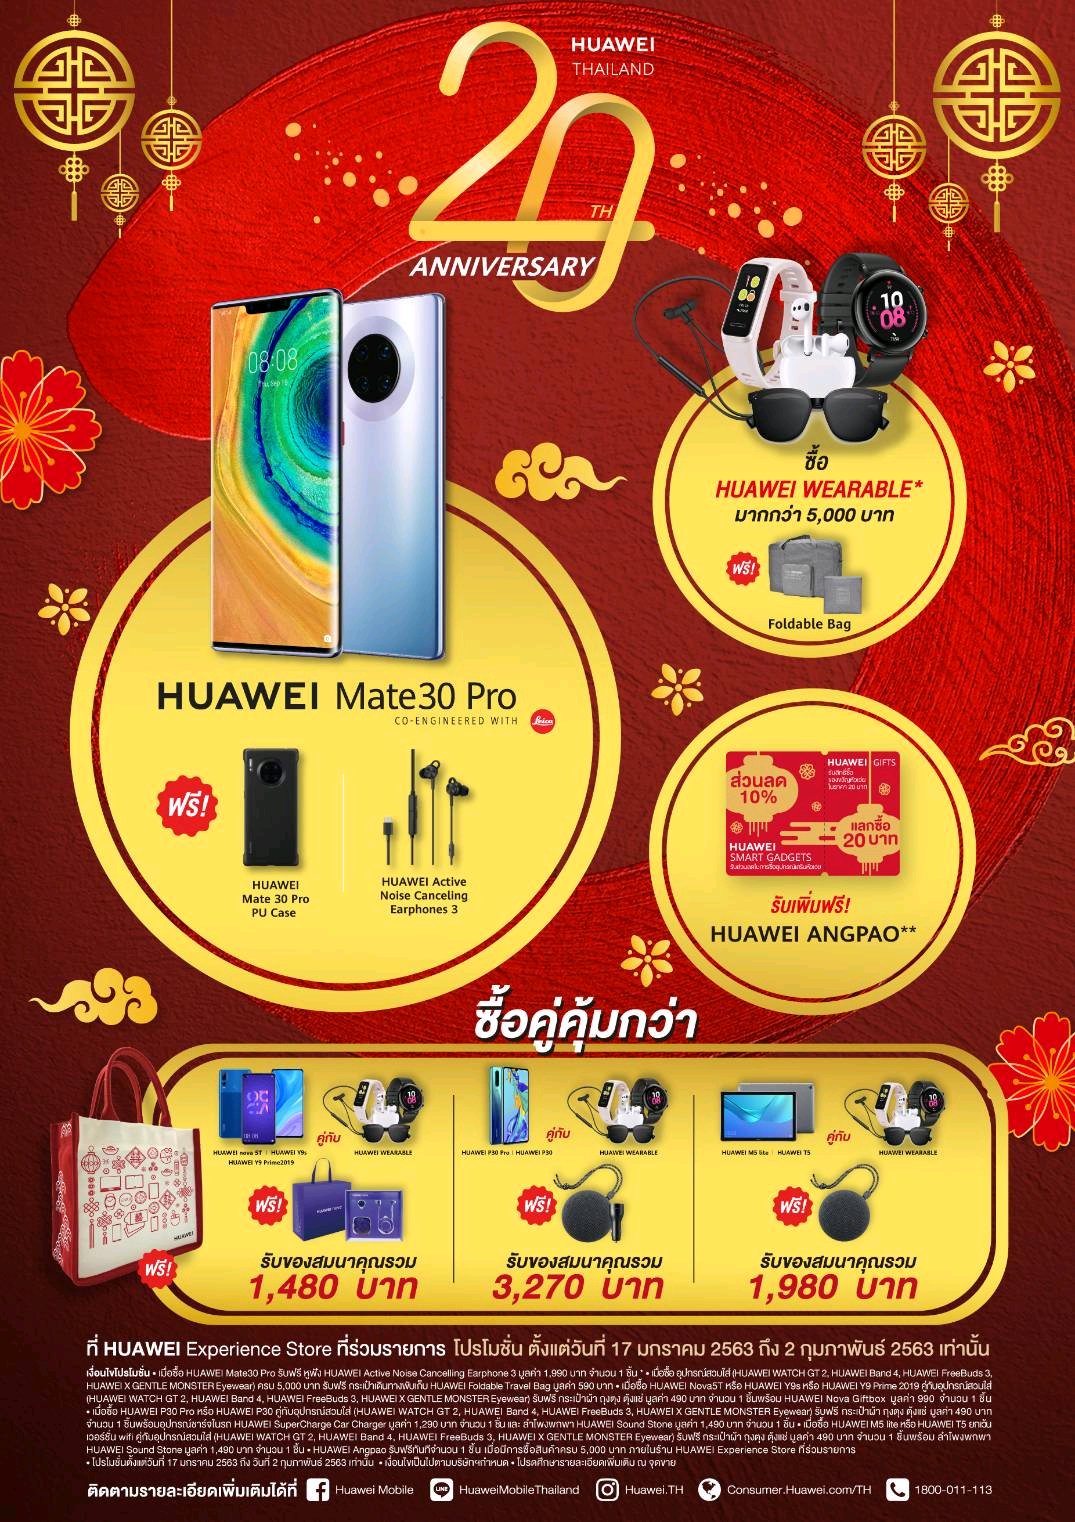 Huawei Thailand 20th Anniversary